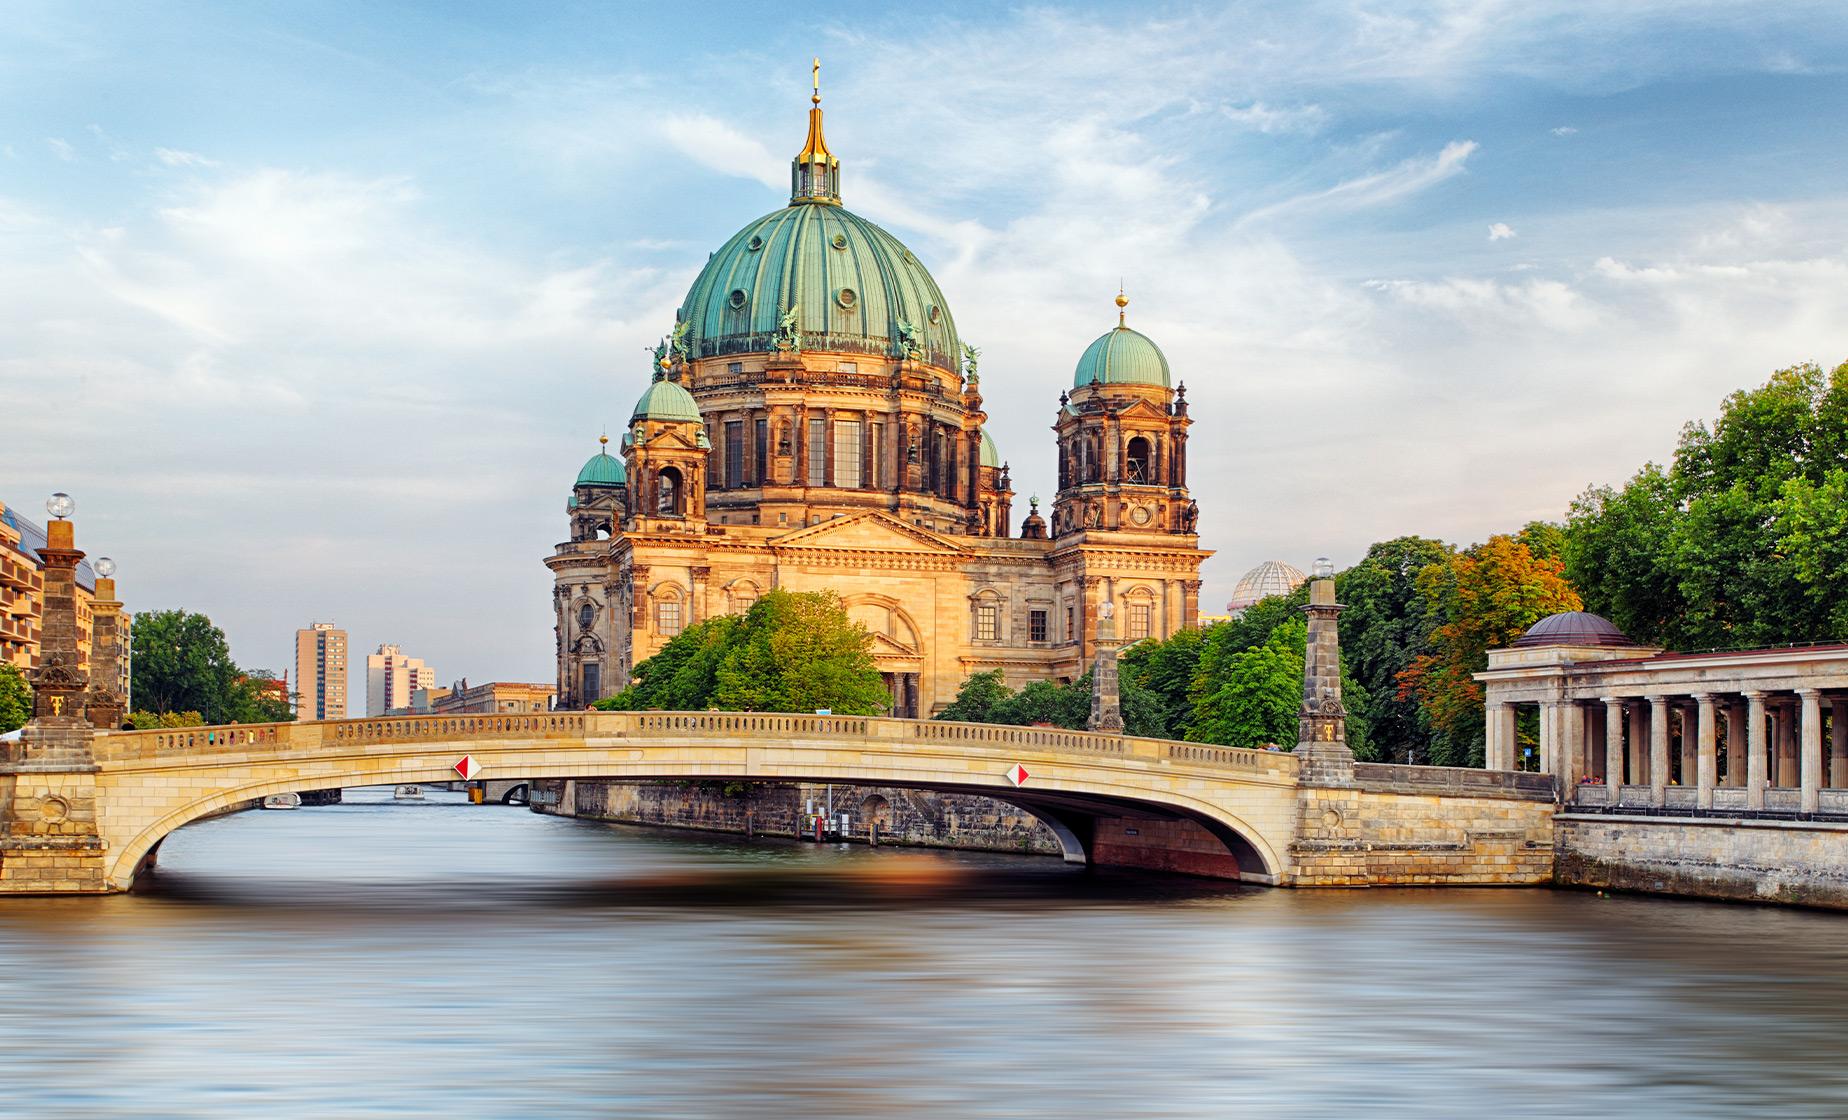 Exclusive Top Twenty Sites of Berlin (Charlottenburg Palace, Bellevue Palace)